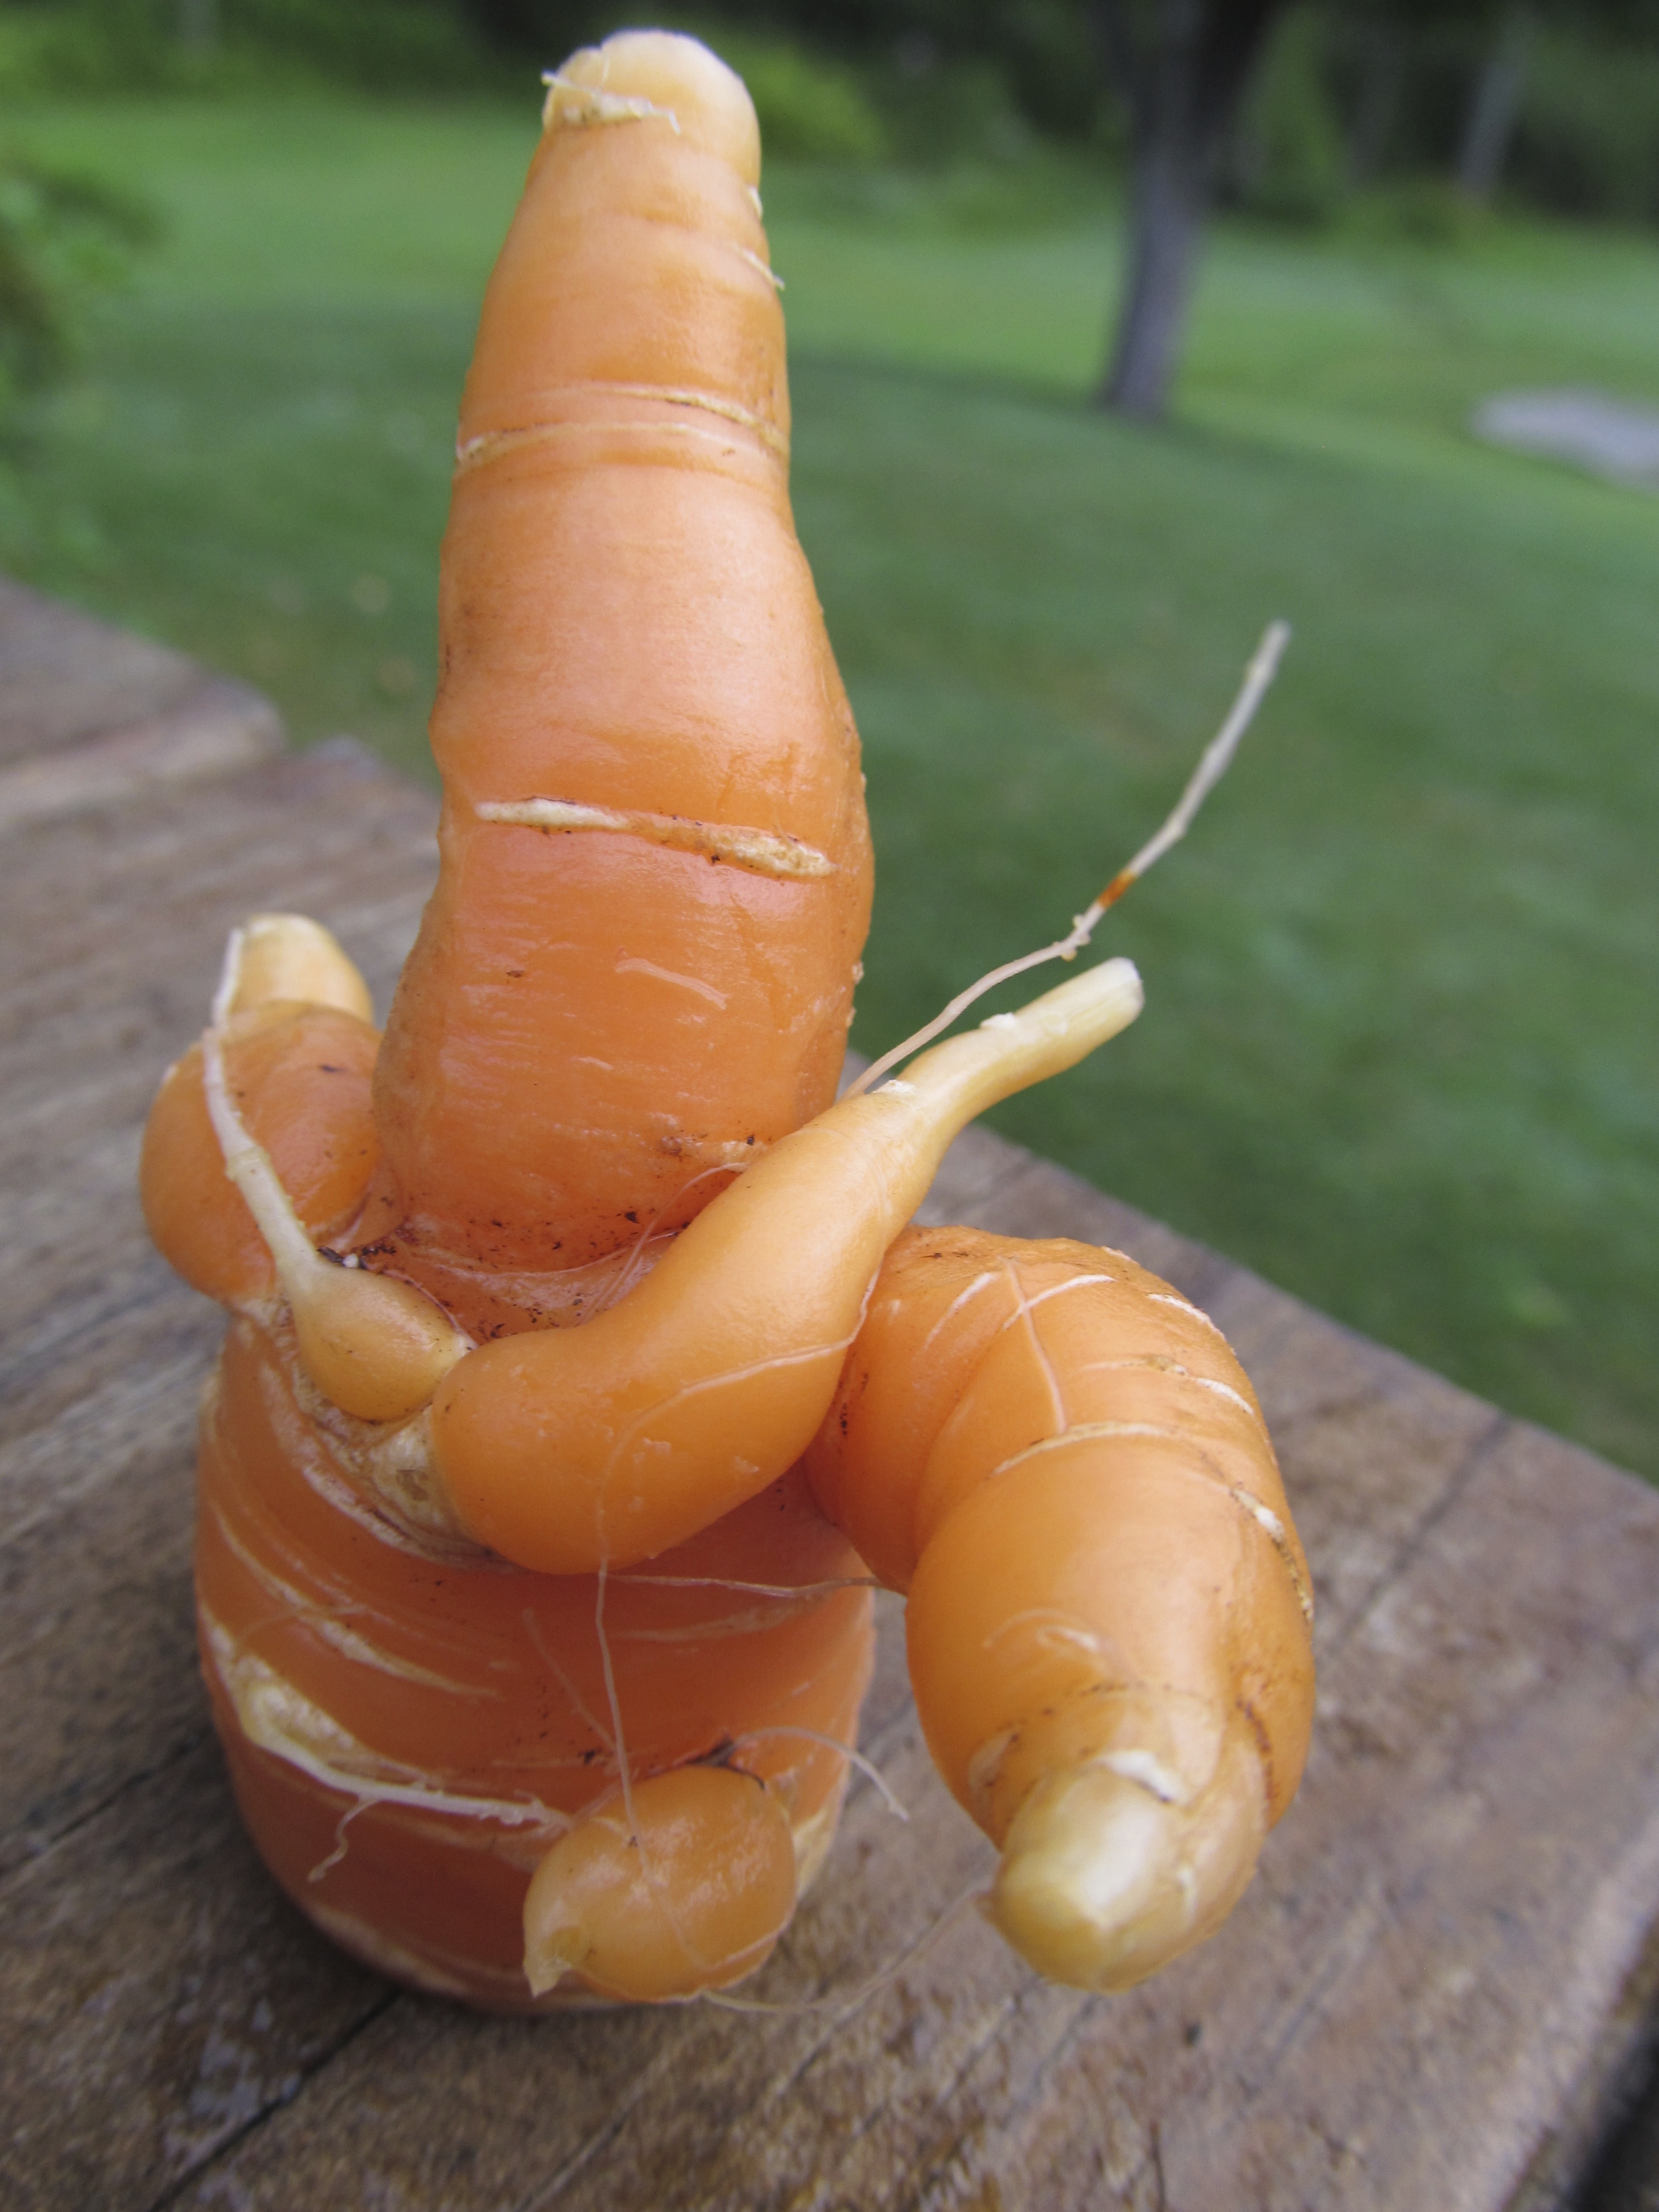 Merrymaking The Twisted Carrot | cindyeksuzian